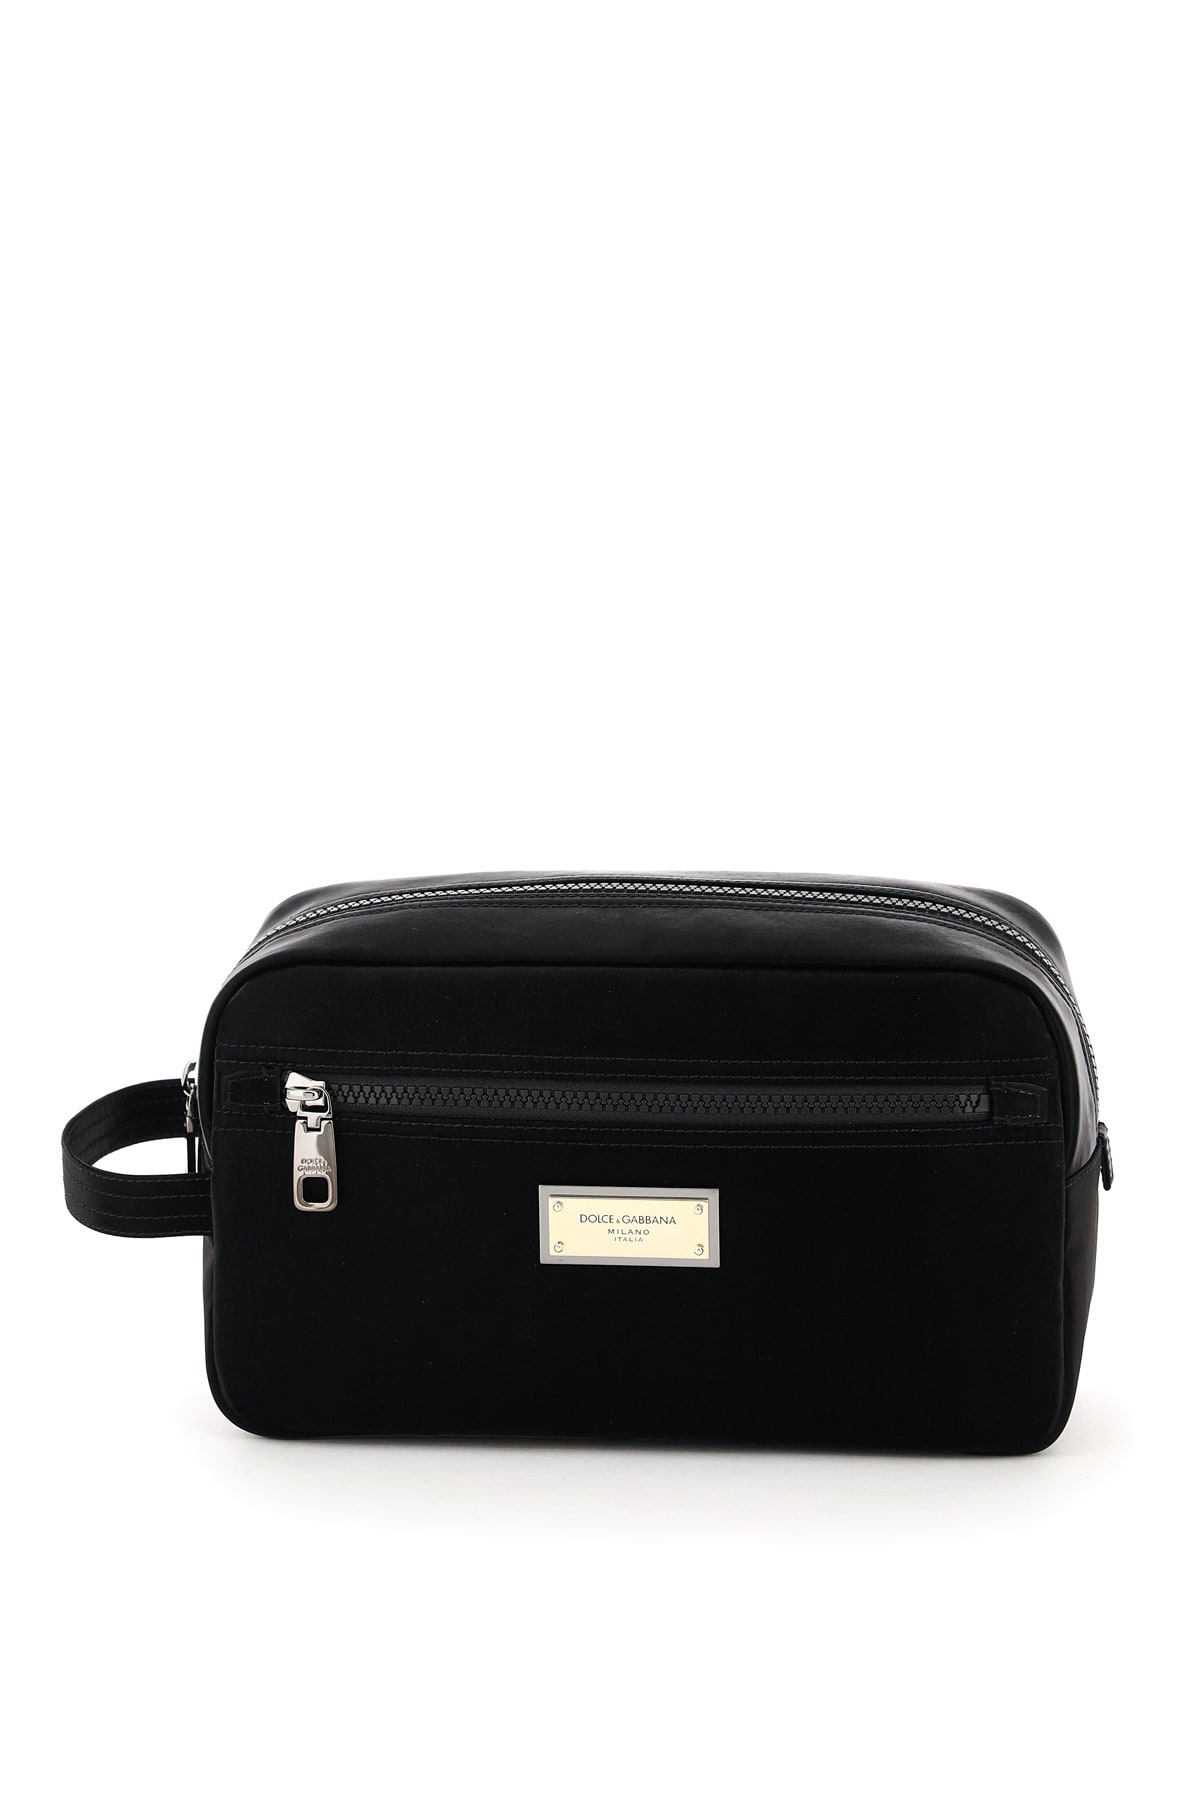 Dolce & Gabbana Luggage In Black